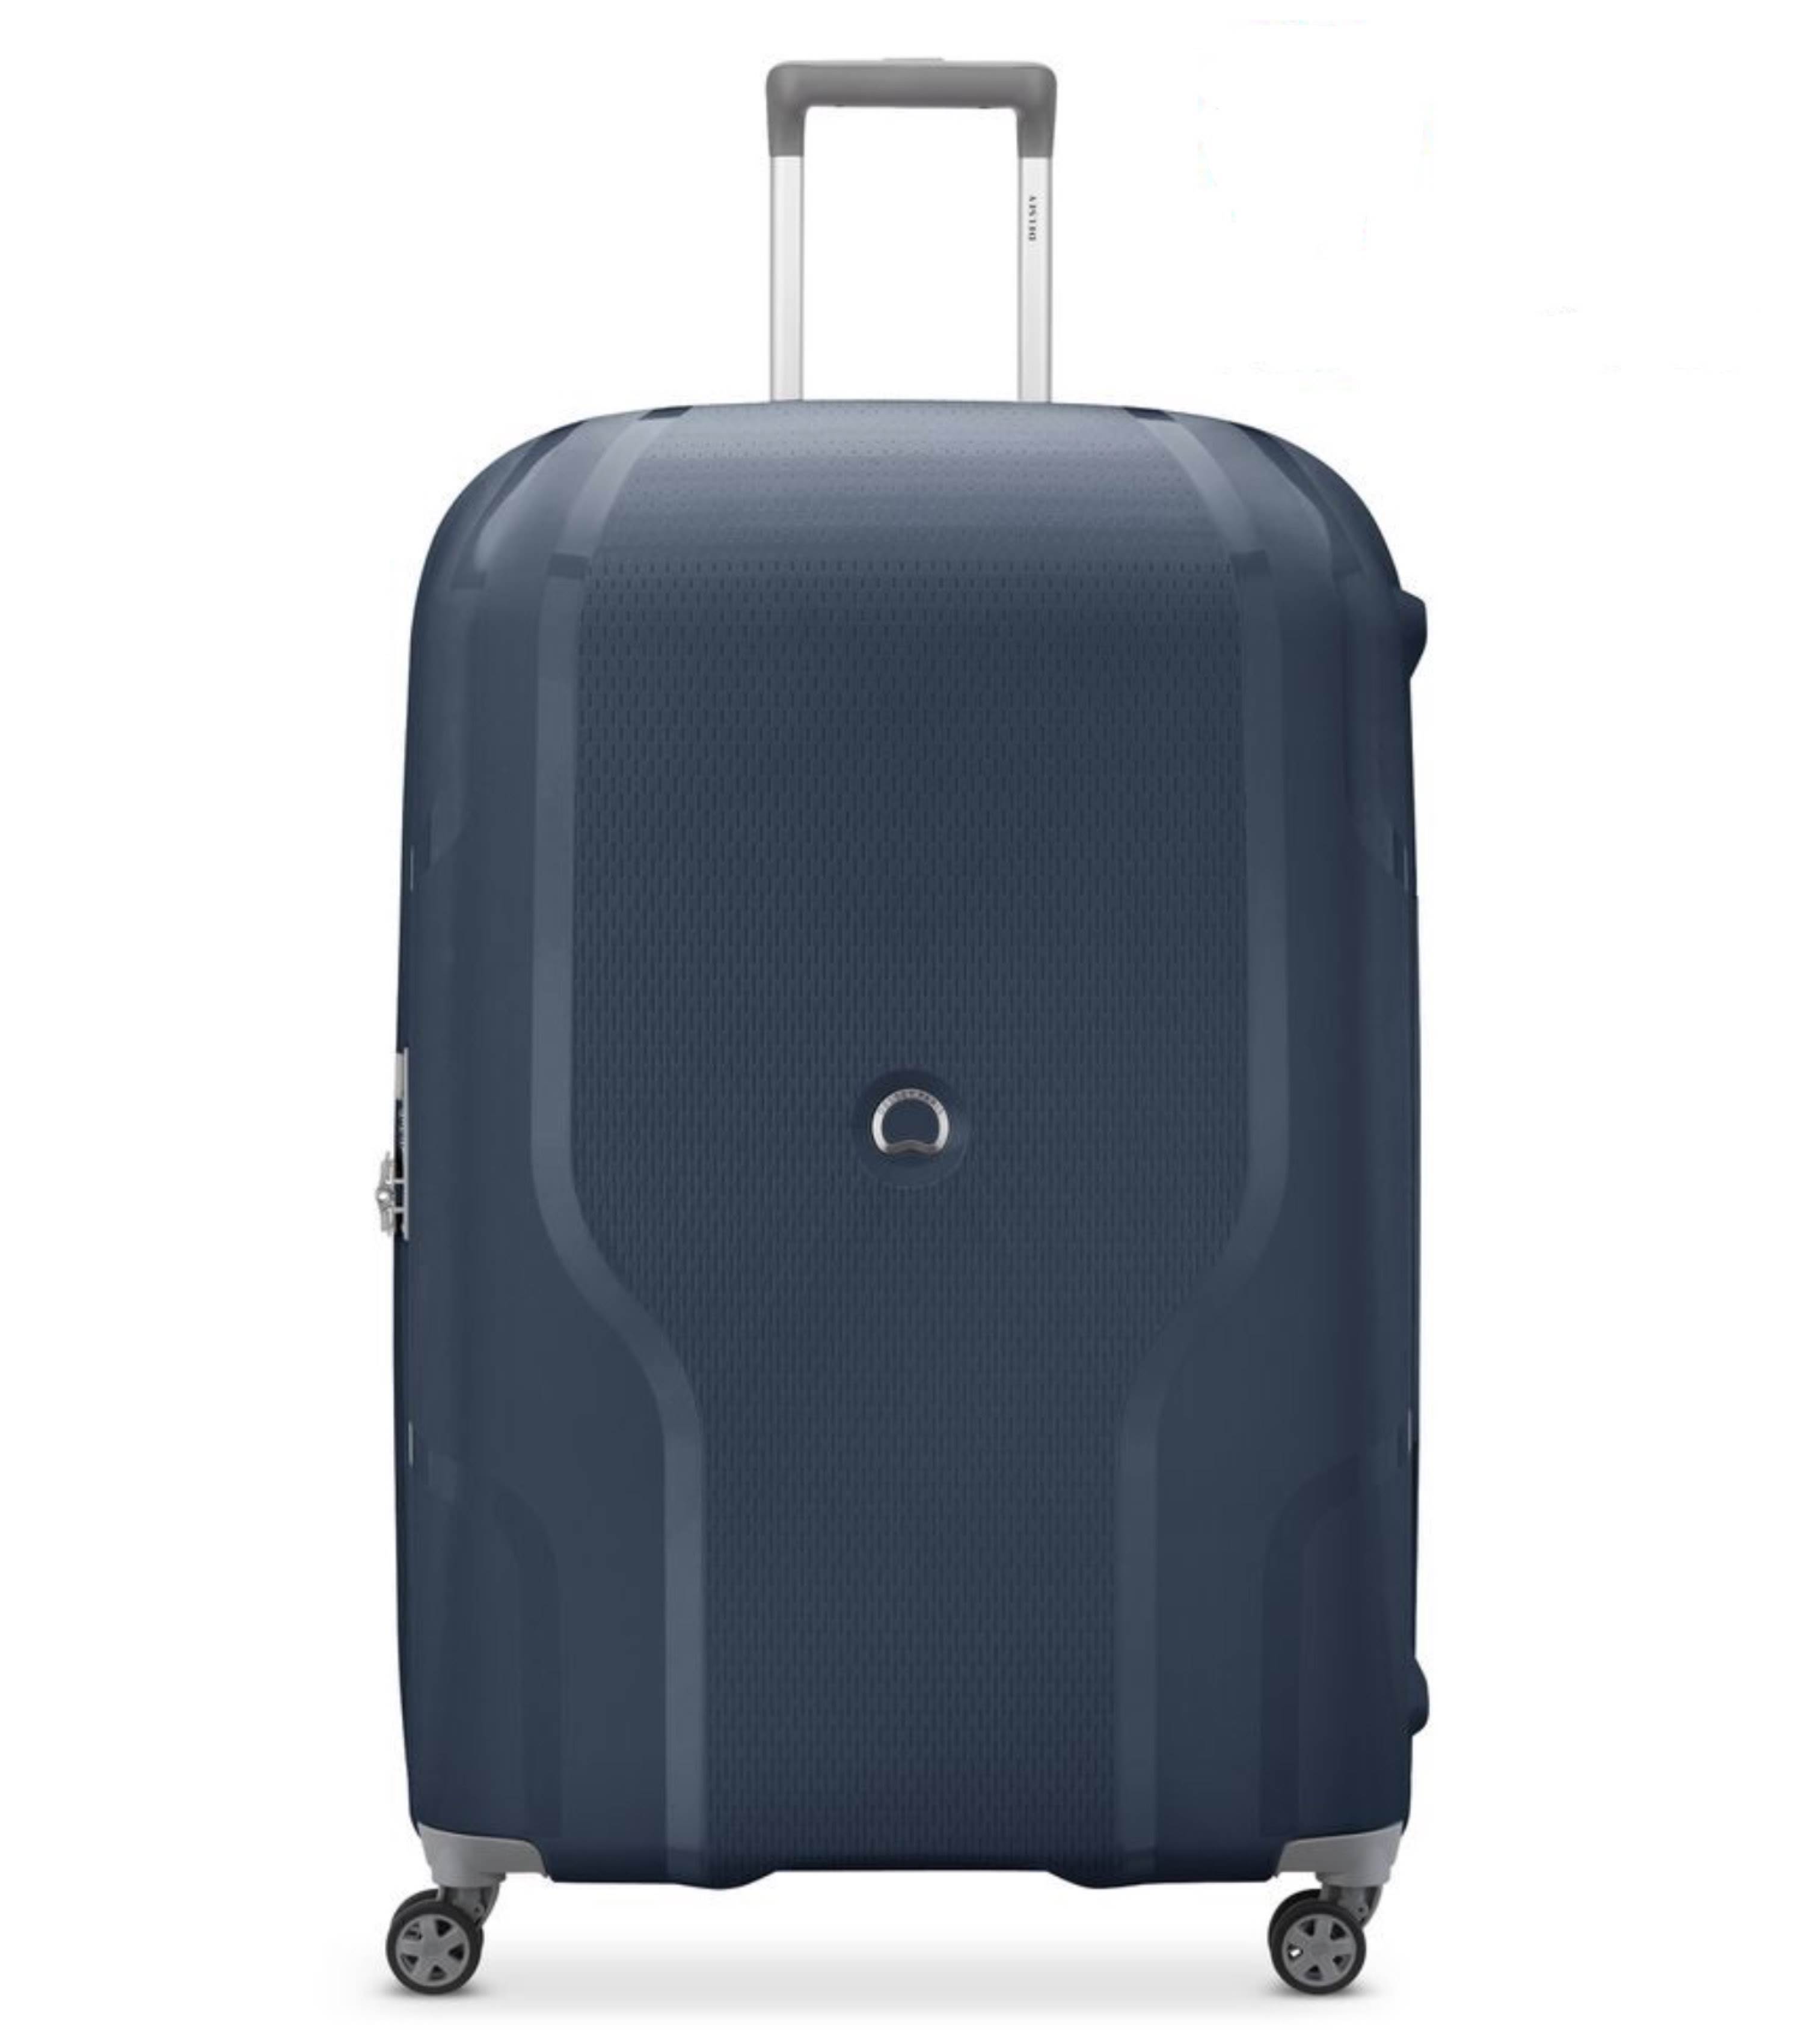 Carry-On Luggage Delsey Luggage Unisex-Adult Clavel Hardside Expandable Luggage with Spinner Wheels Luggage 